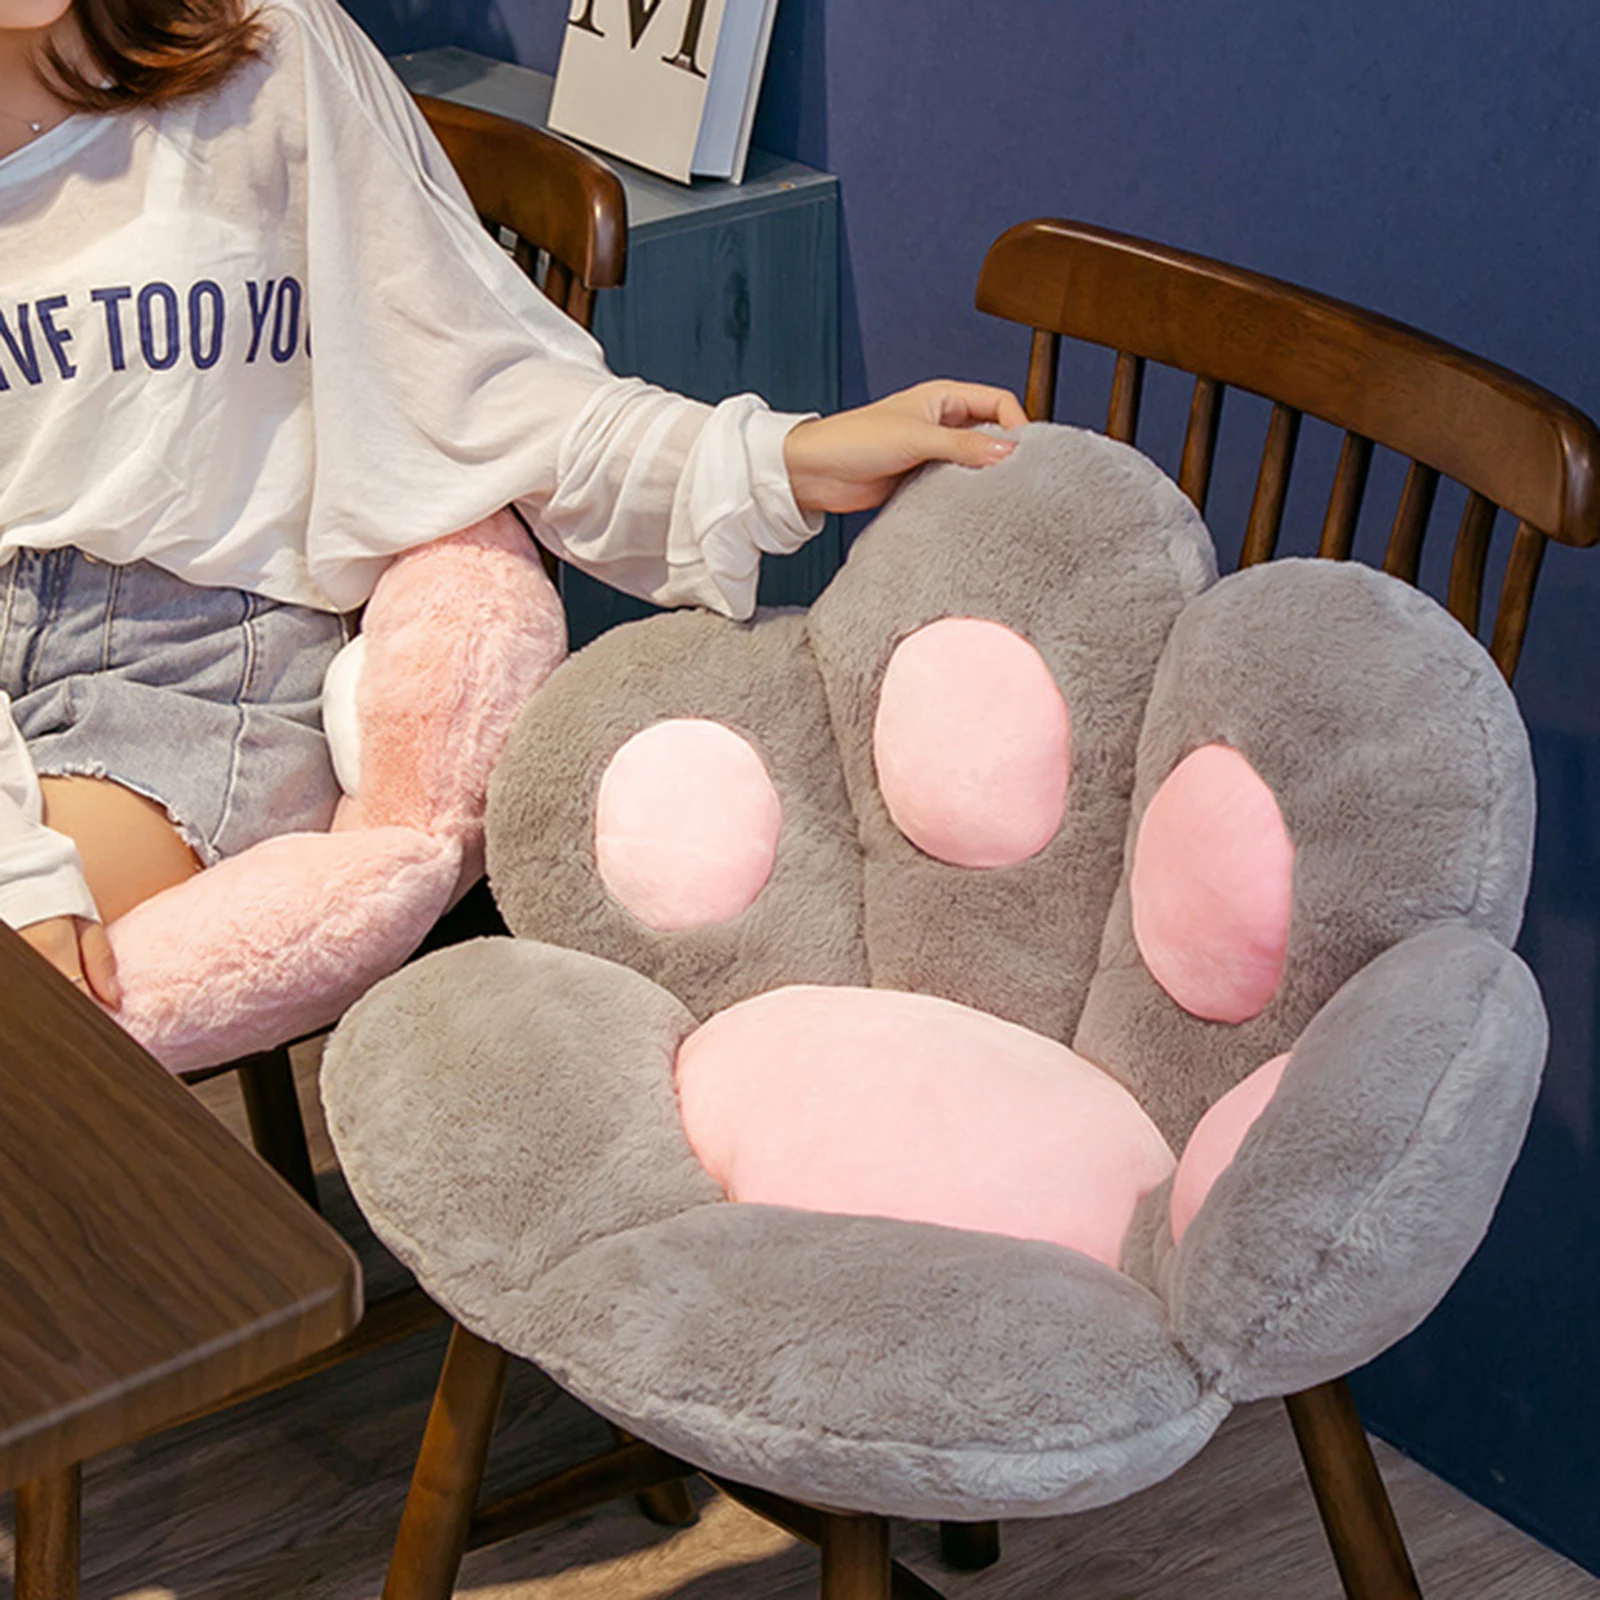 Soft Paw Pillow Animal Seat Cushion Pads Waist Pillow Stuffed Plush Sofa Indoor Floor Home Chair Office Chair Decor